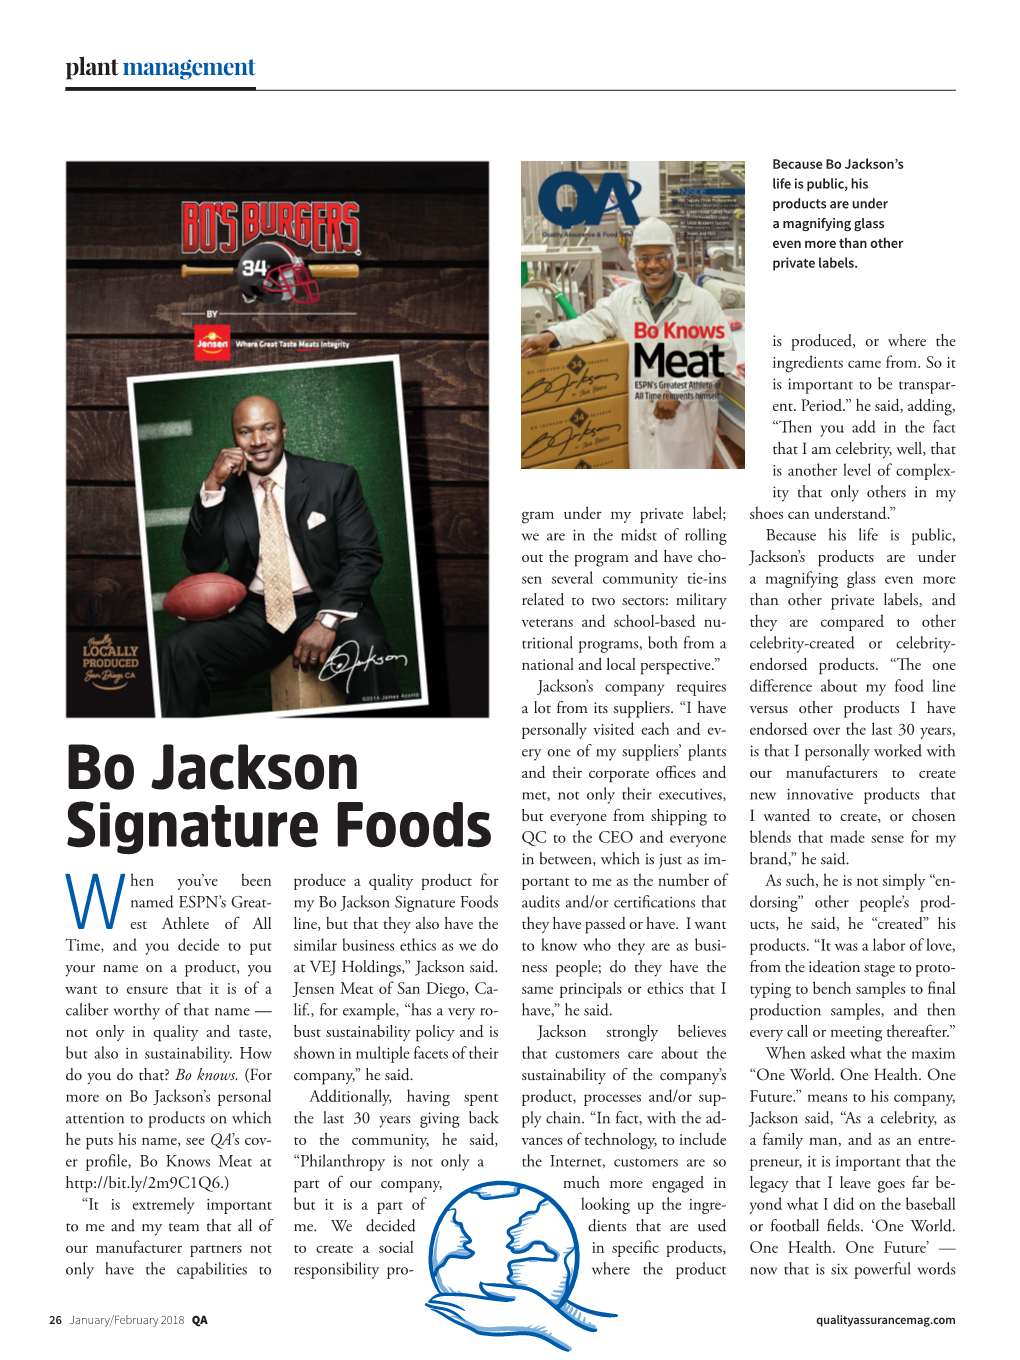 Bo Jackson Signature Foods